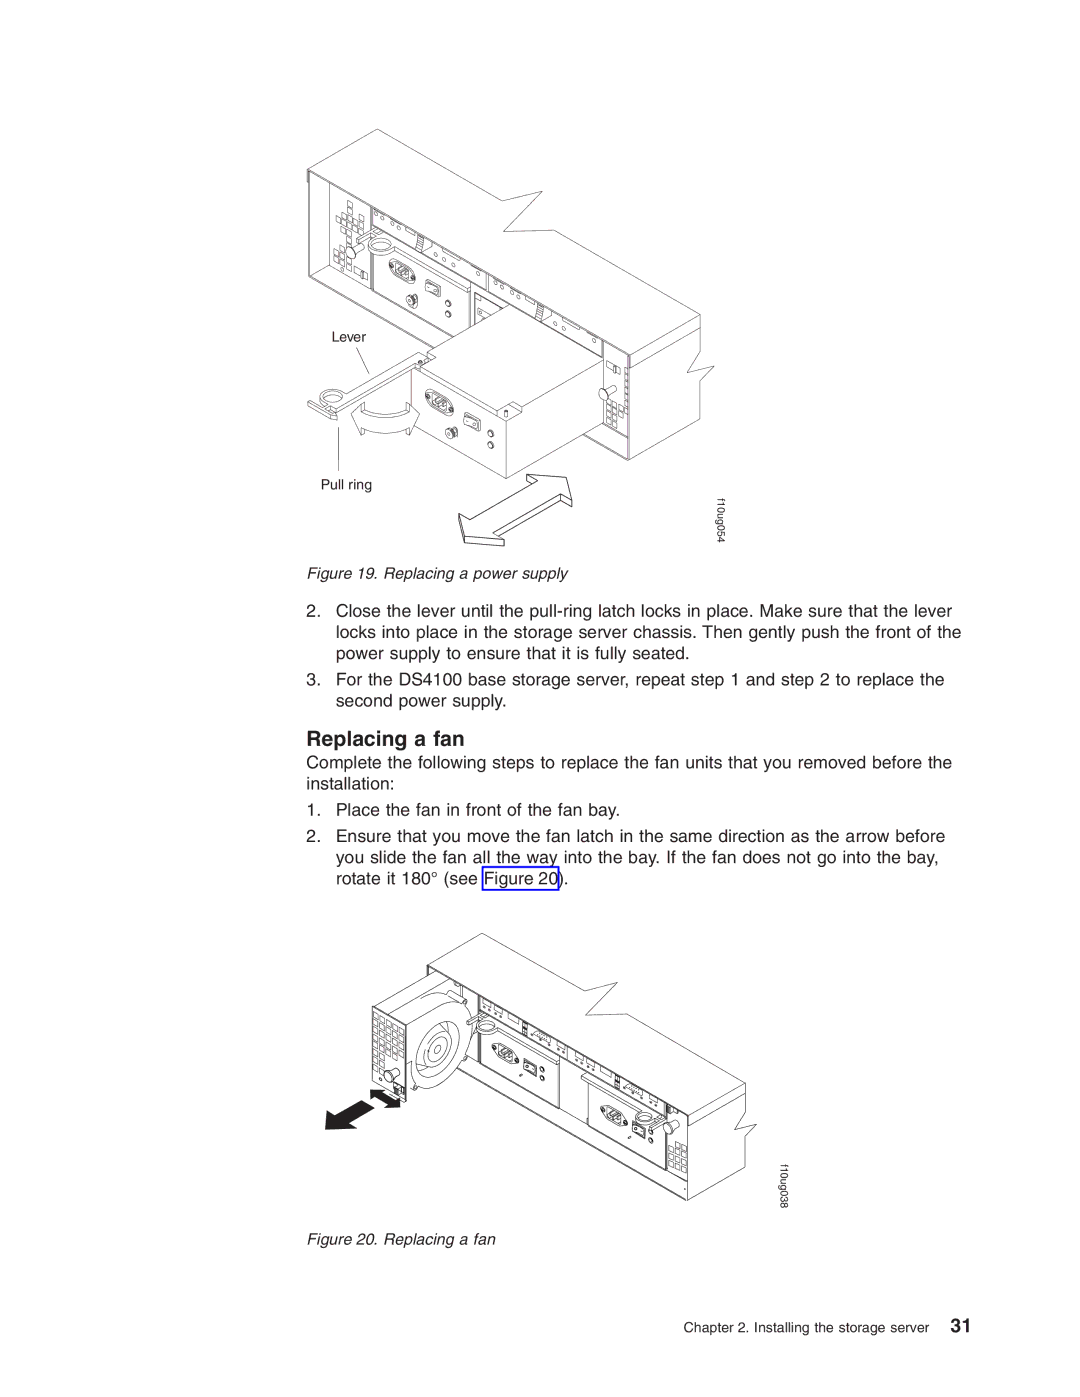 IBM Partner Pavilion DS4100 manual Replacing a fan 